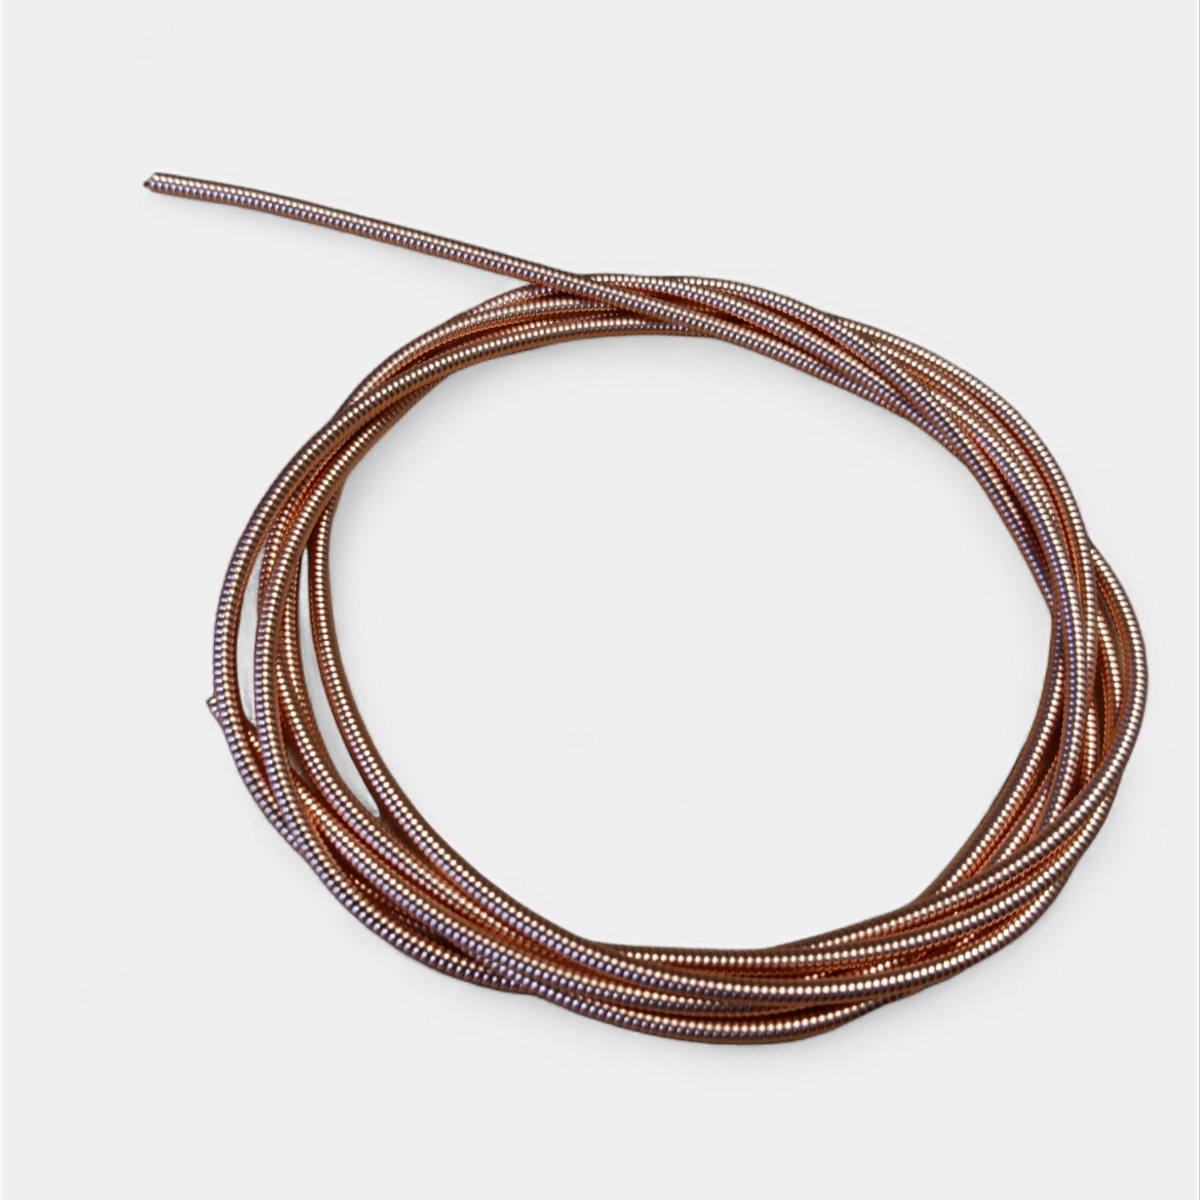 1 Metre 1.9mm Diameter Perl Wire Copper